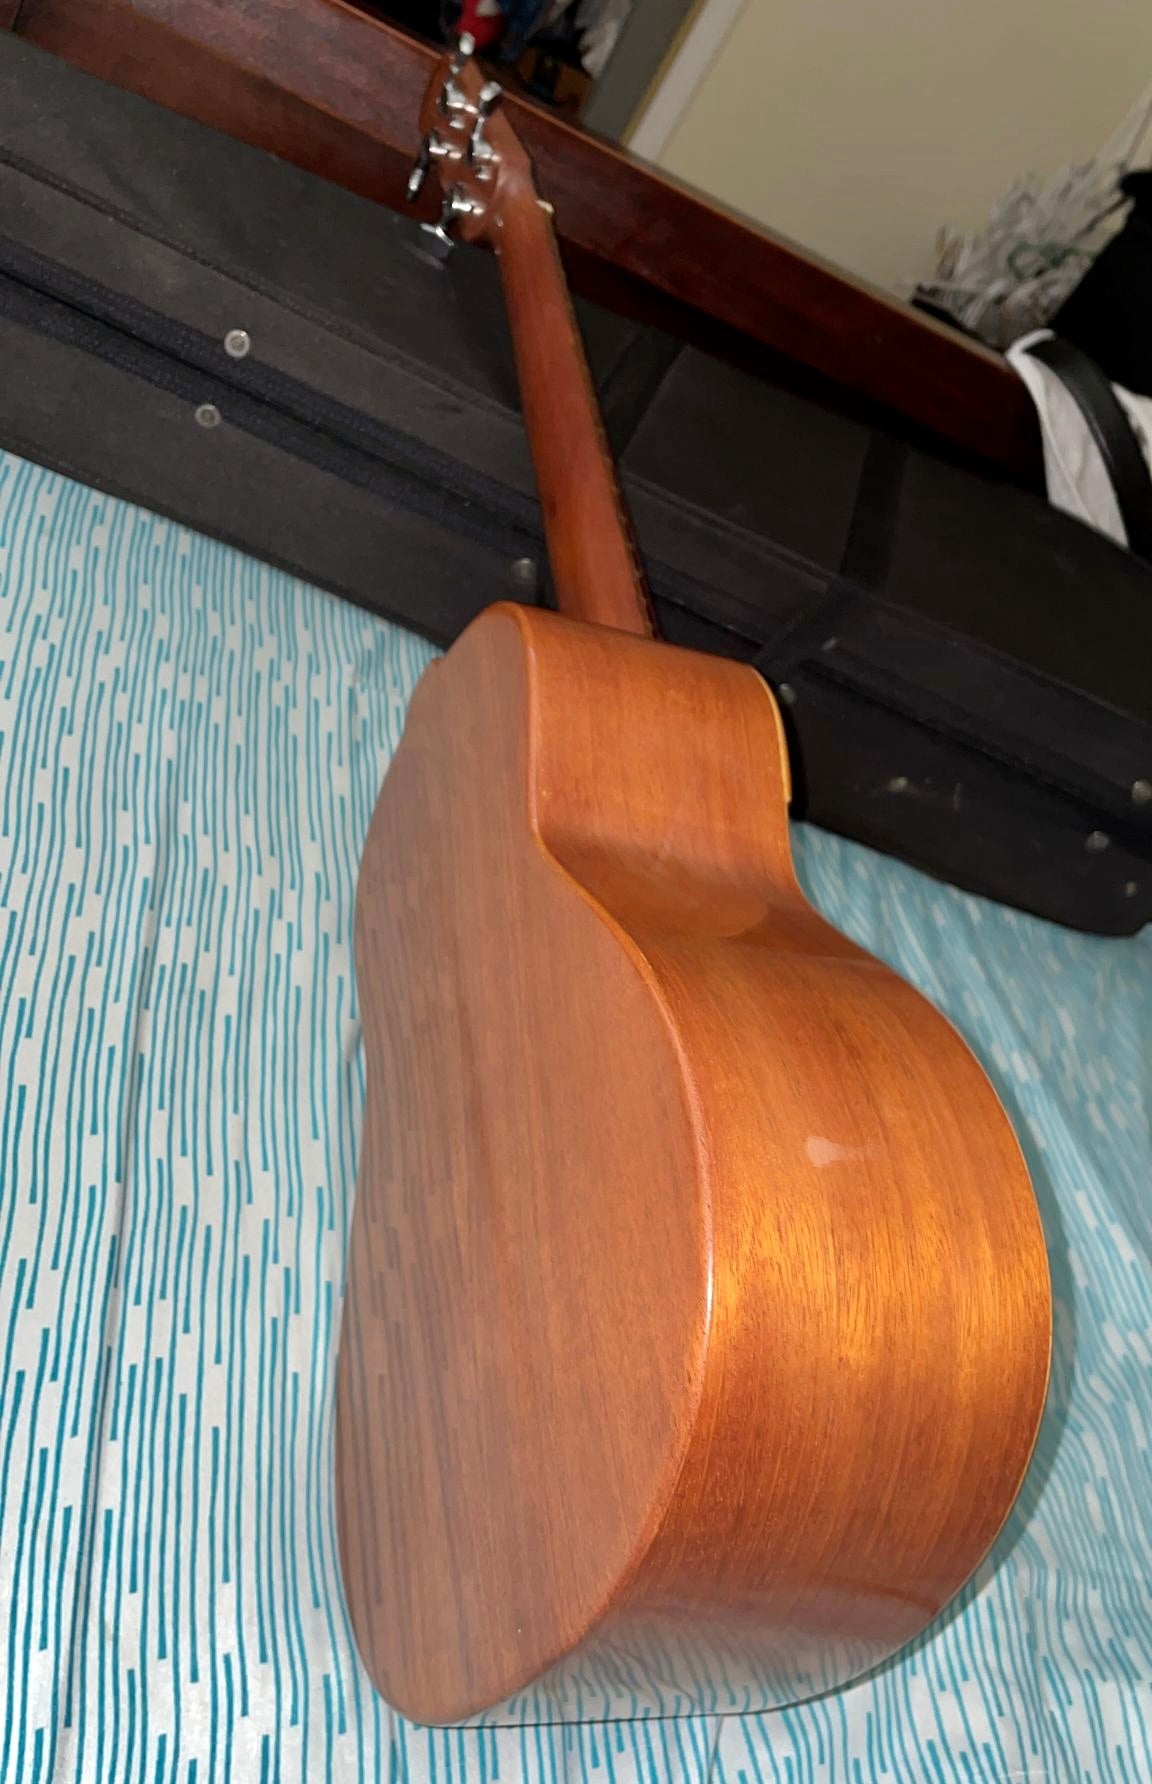 Cuatro Mahogany with Fir Tree Wood (Abeto) Soundboard 17 Frets